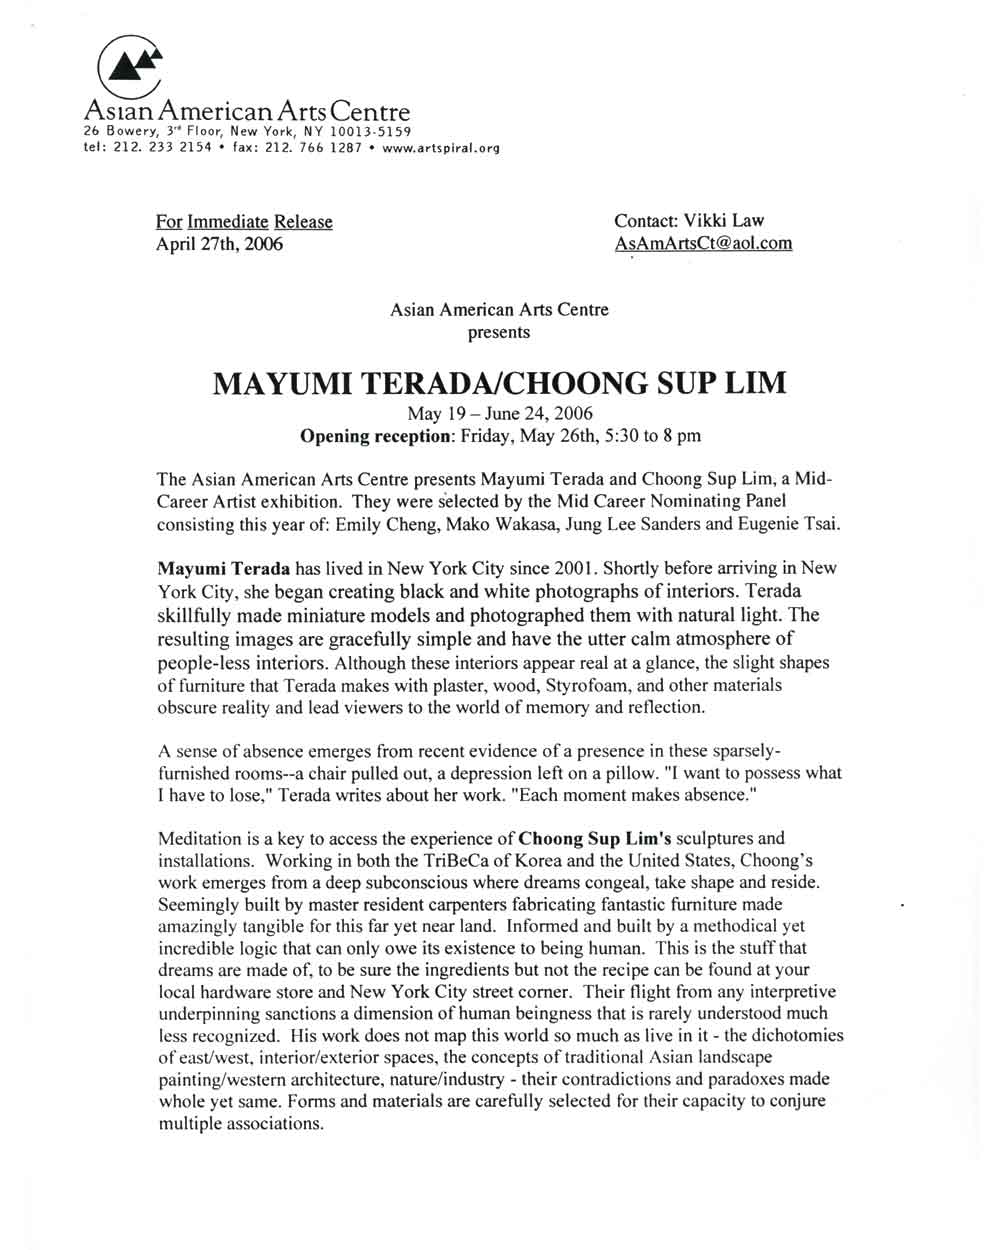 Mayumi Terada/Choong Sup Lim, press release, pg 1